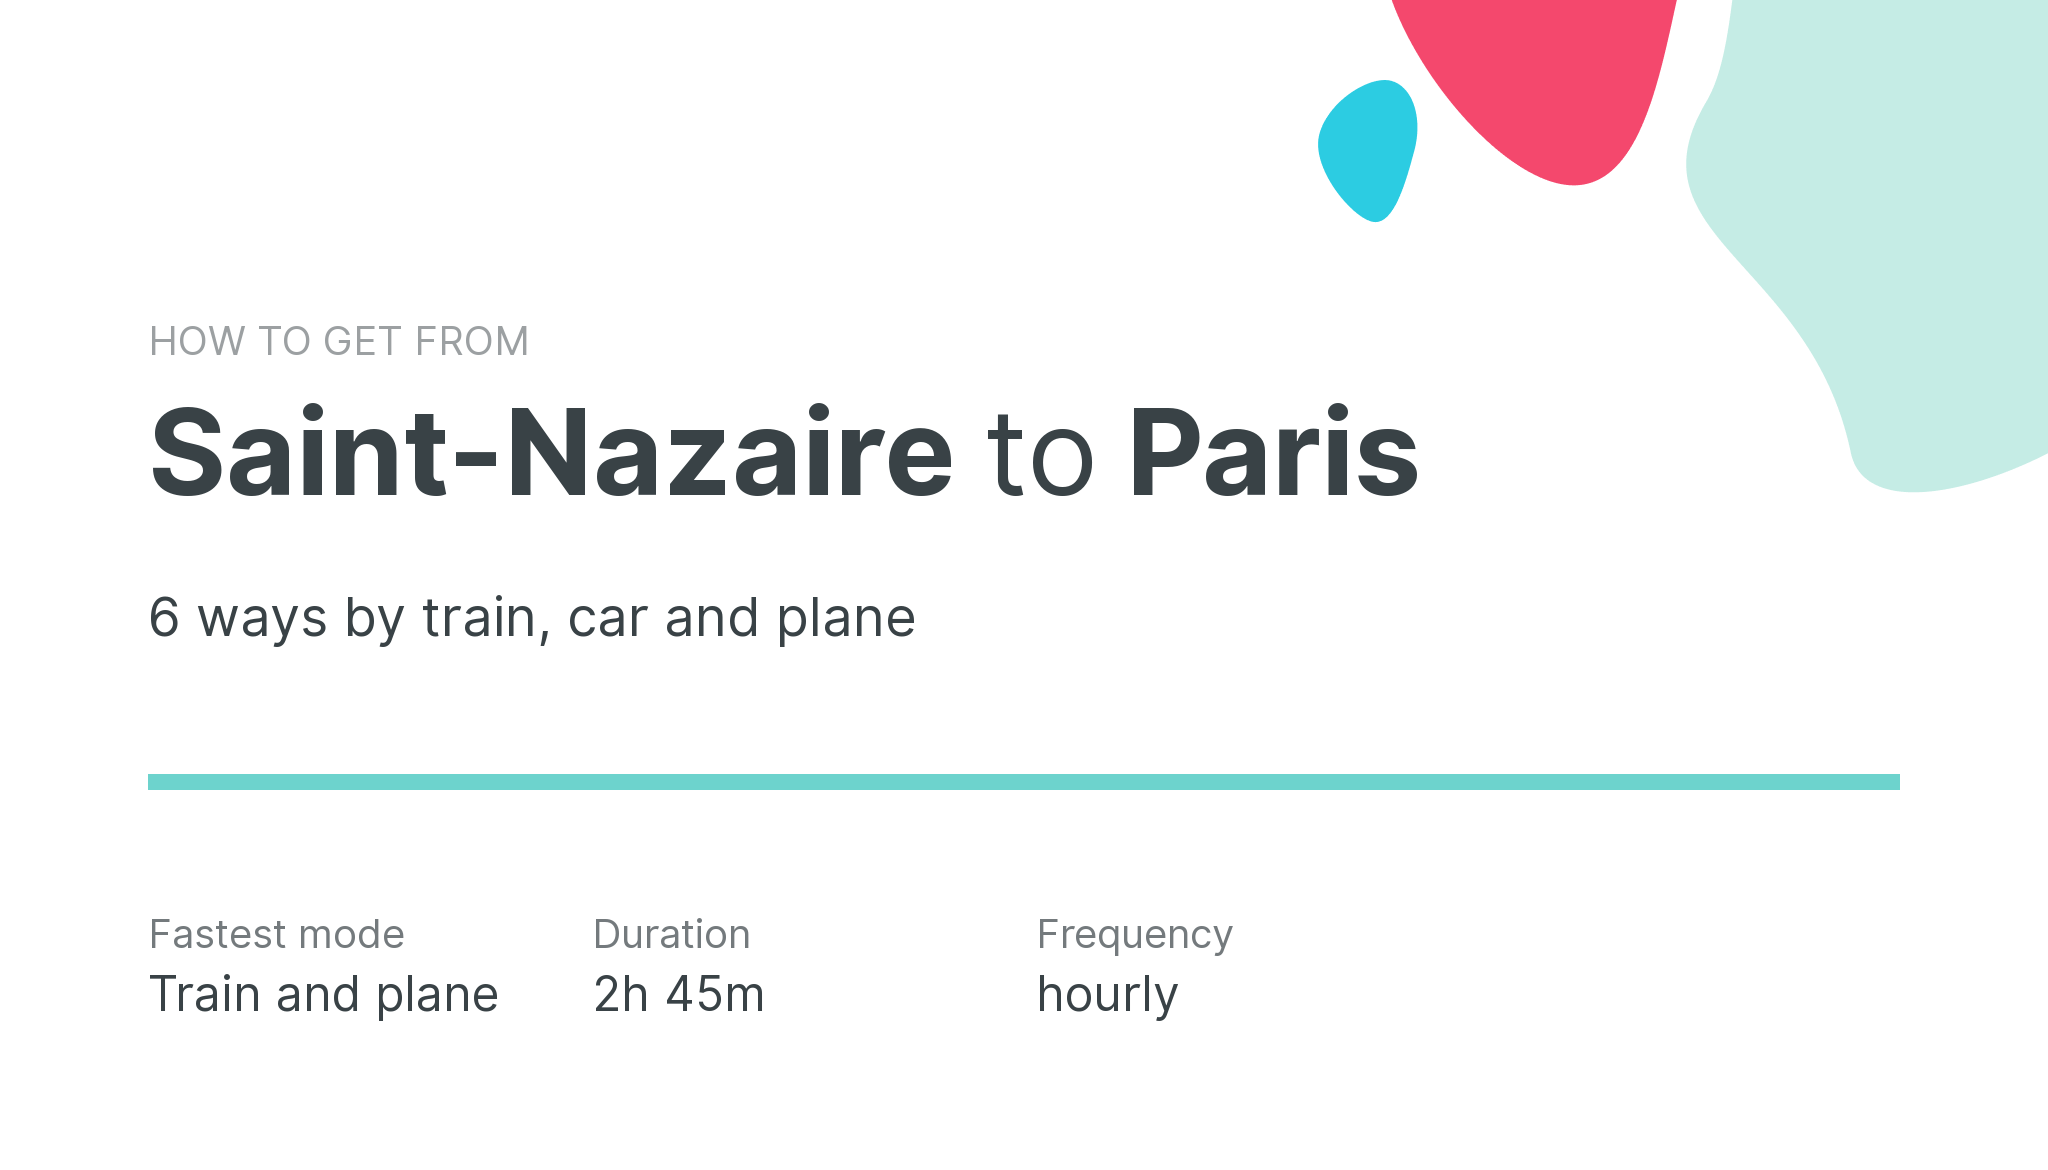 How do I get from Saint-Nazaire to Paris